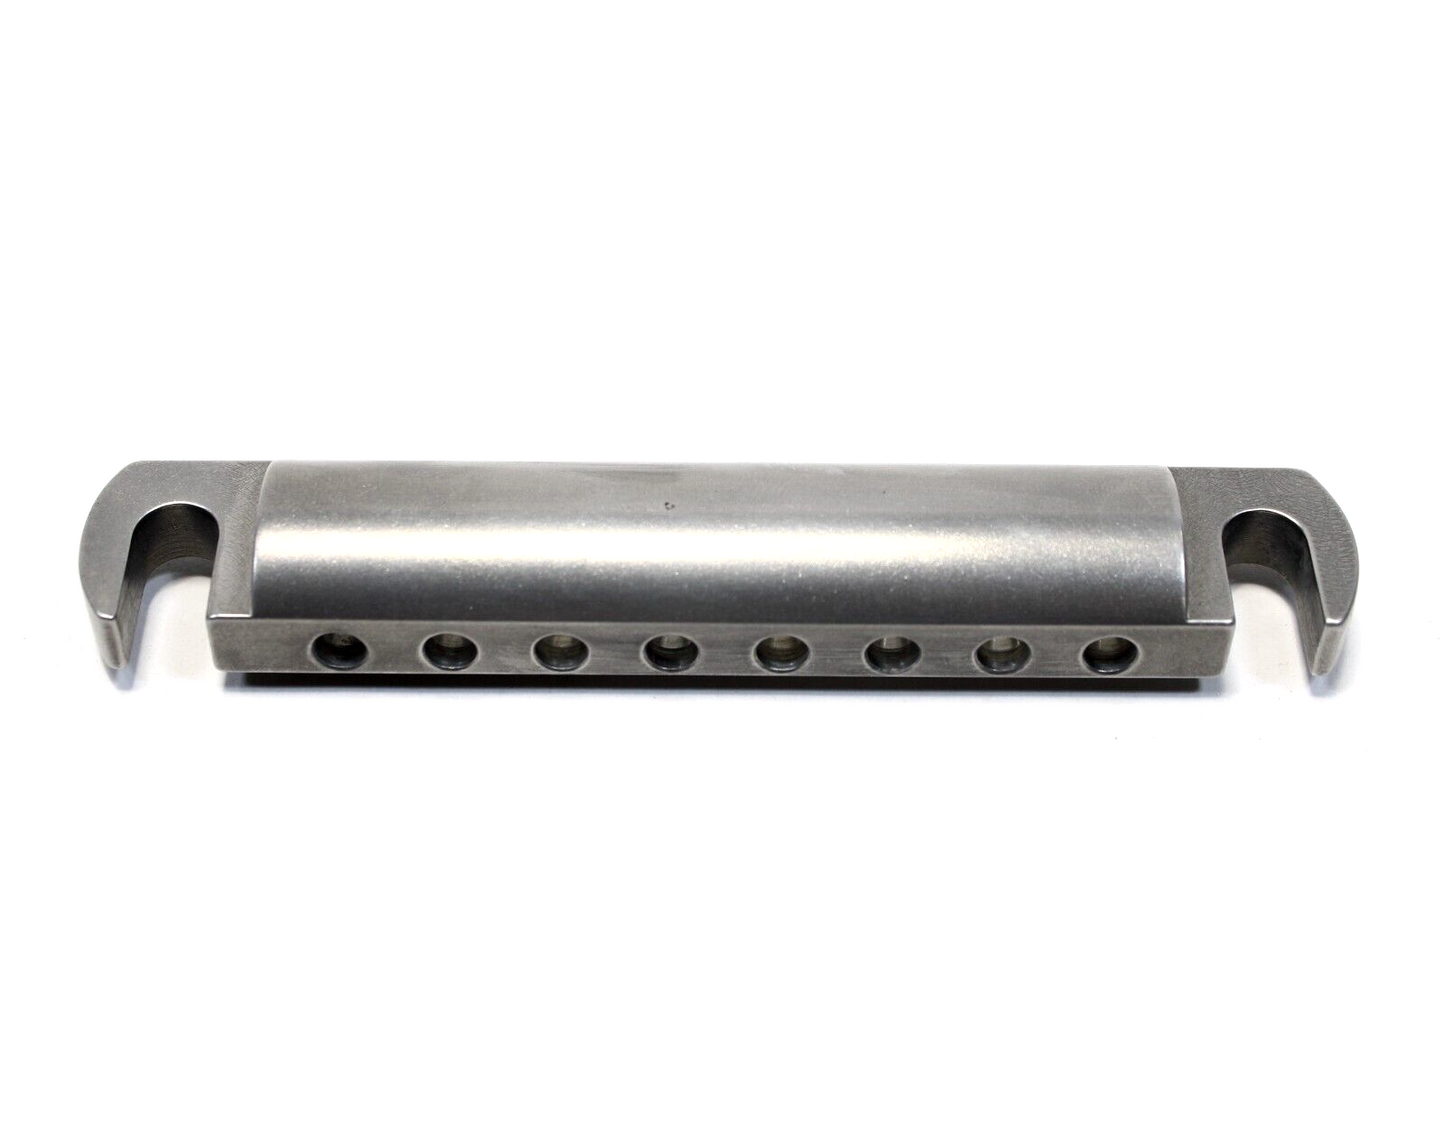 Peters 8 String Gunmetal lap steel bender bridge, stop tailpiece, made in USA